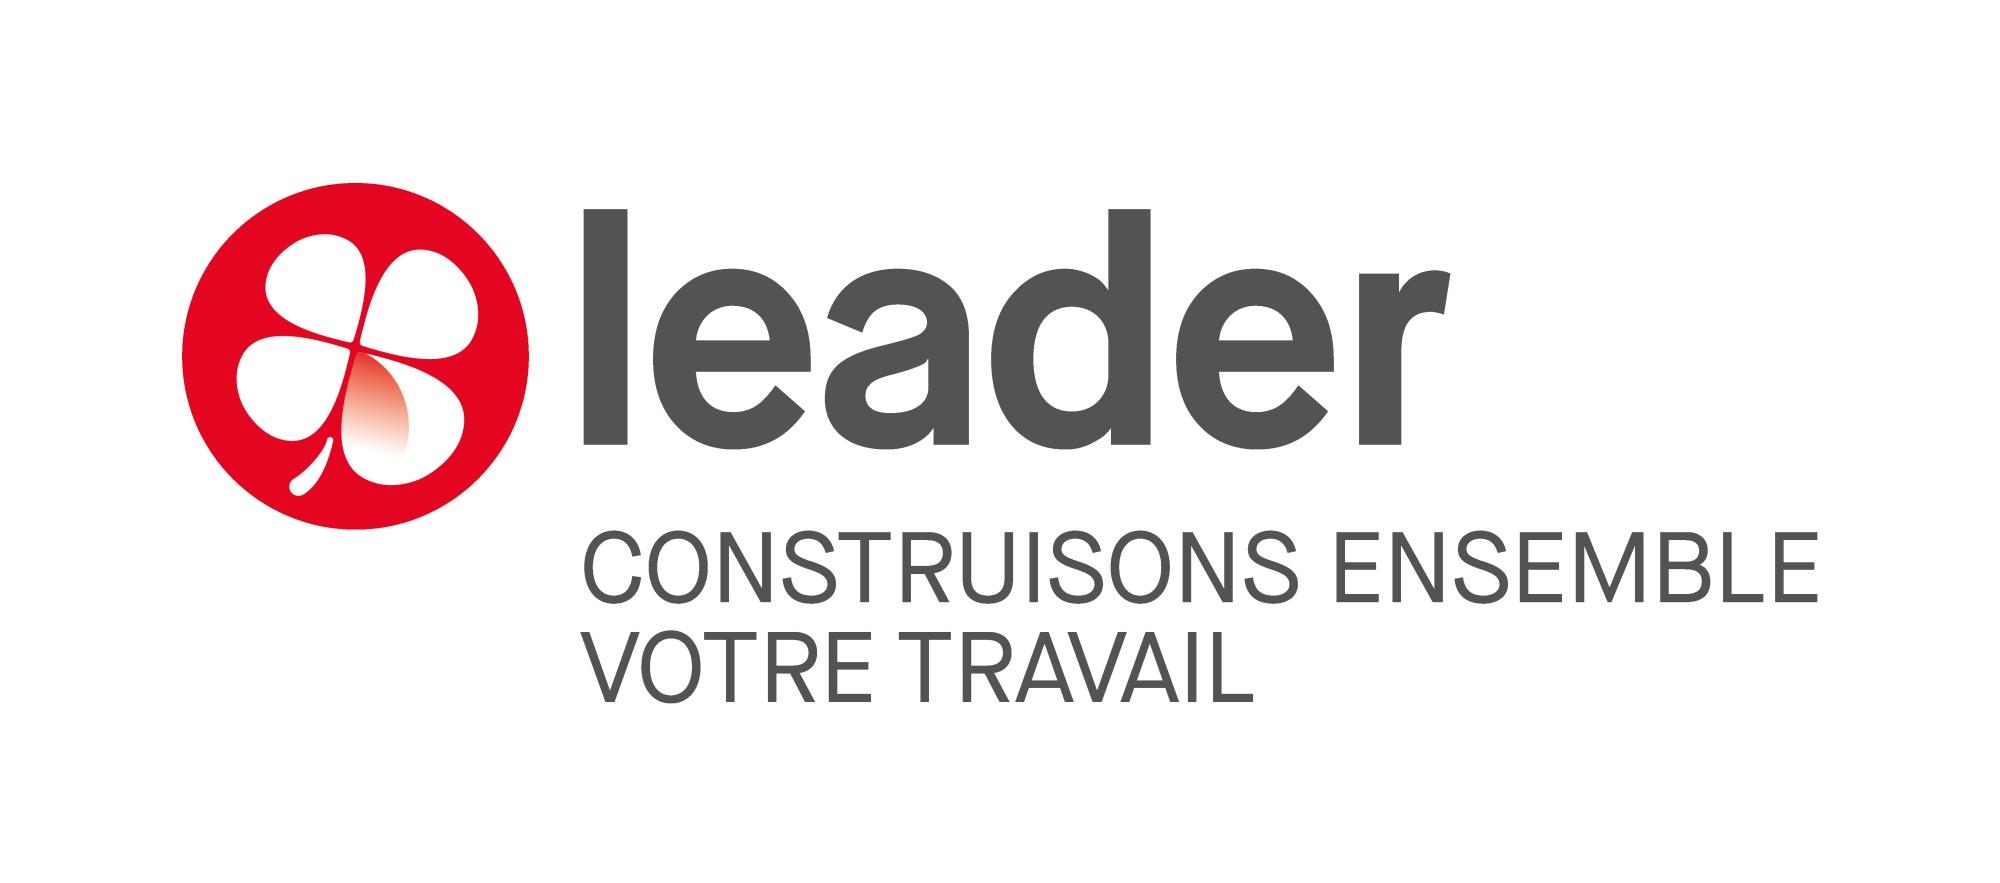 Leader Intérim Et Recrutement Cdi Mérignac Industrie Mérignac